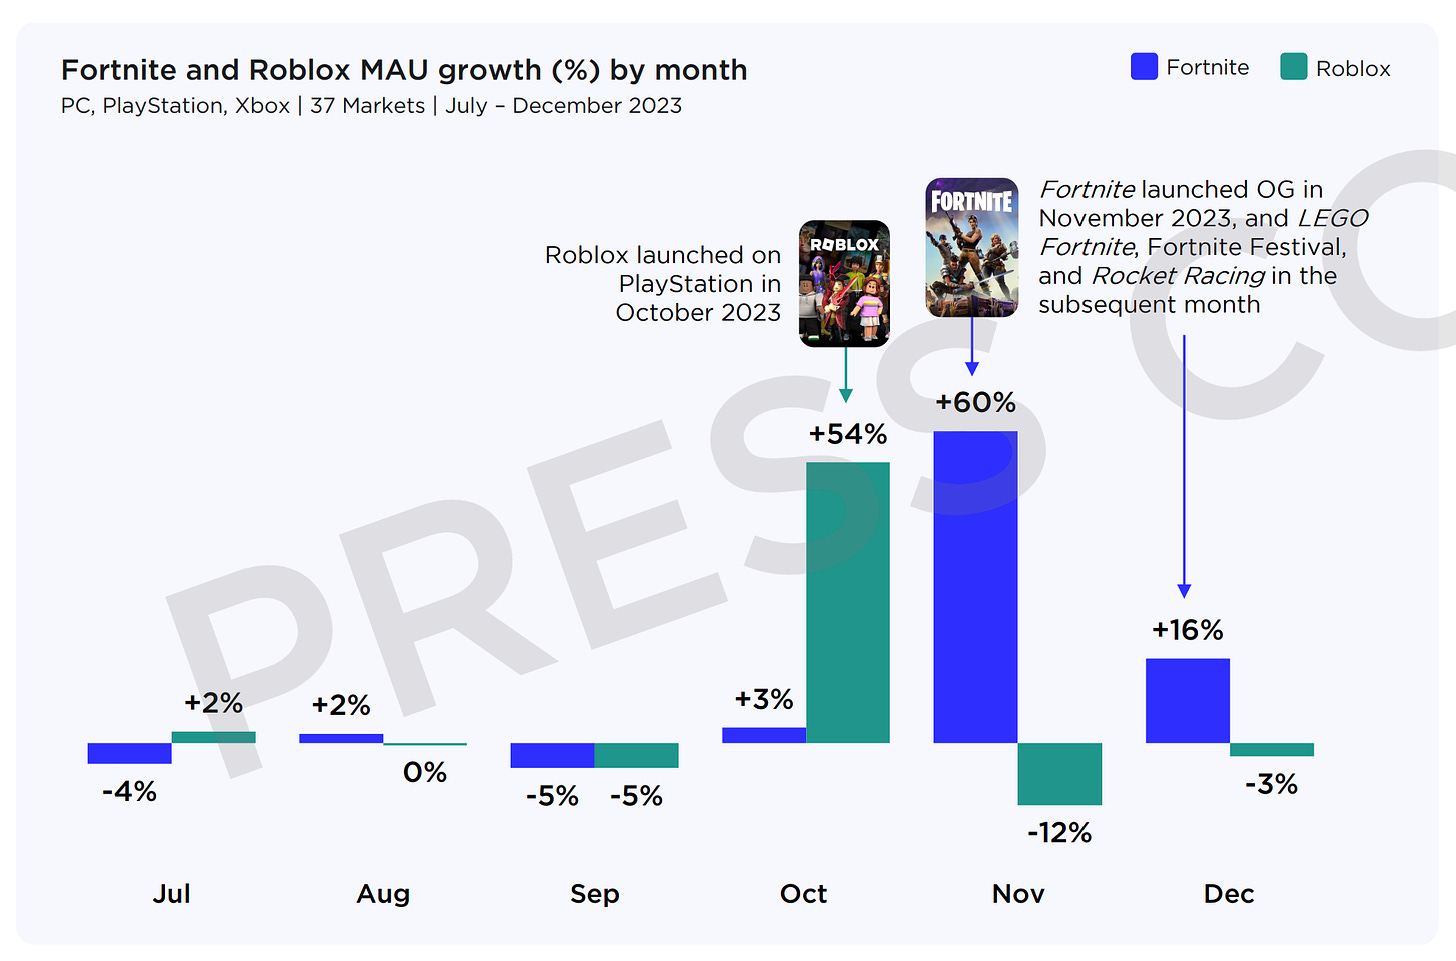 Fortnite and Roblox MAU growth